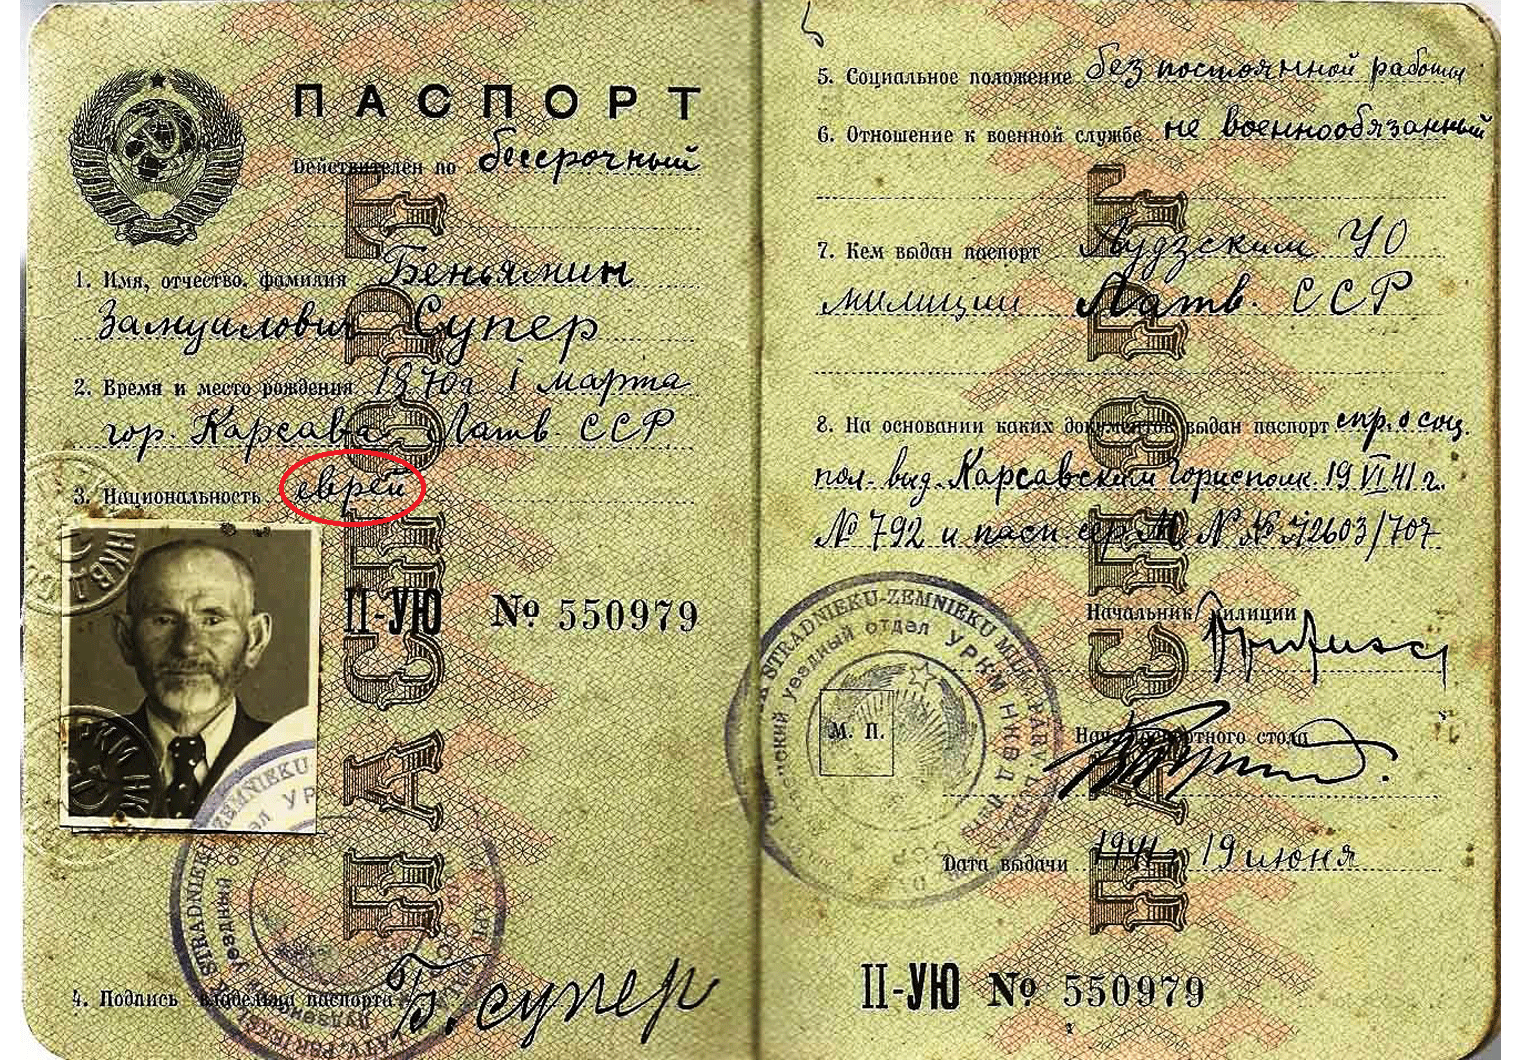 WW2 Jewish refugee passport